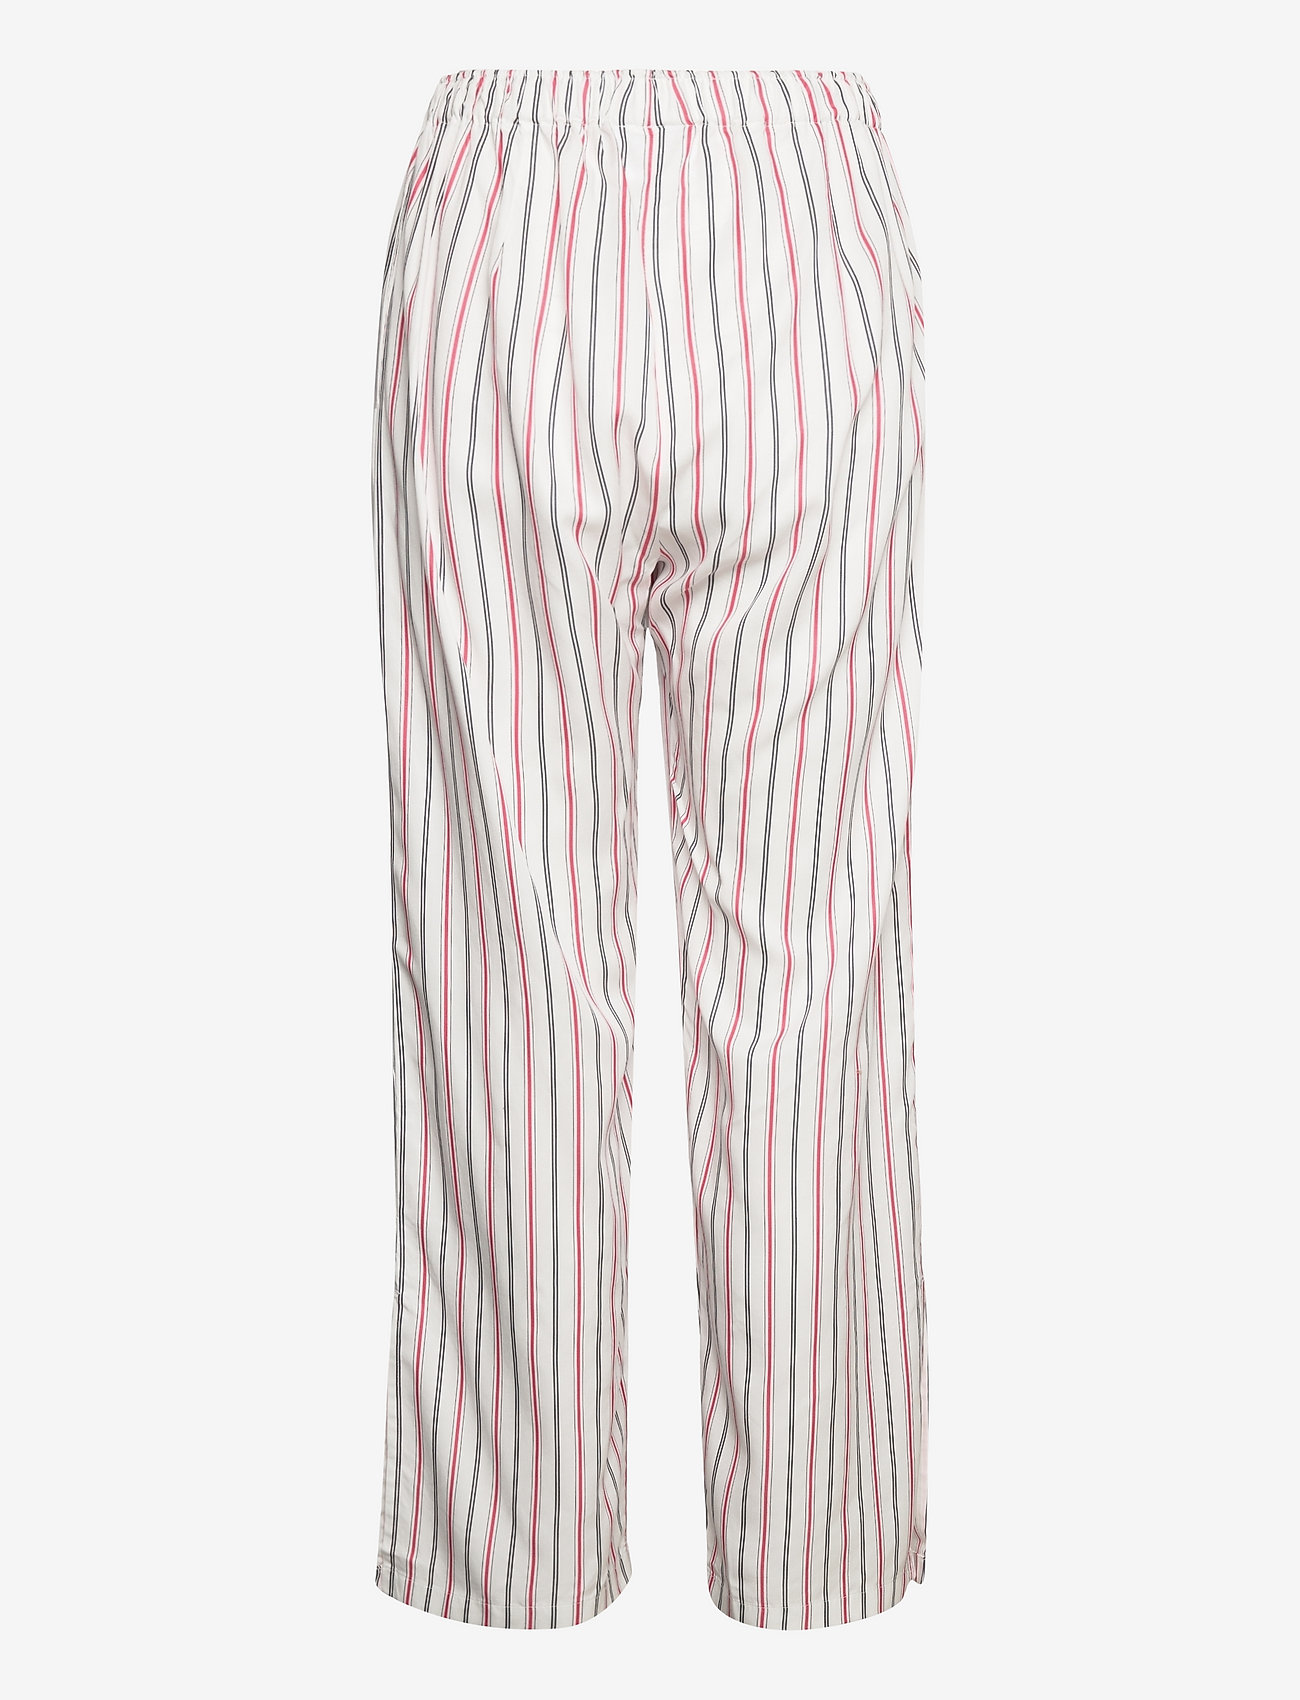 Soulland - Ciara pants - straight leg hosen - white/red stripes - 1